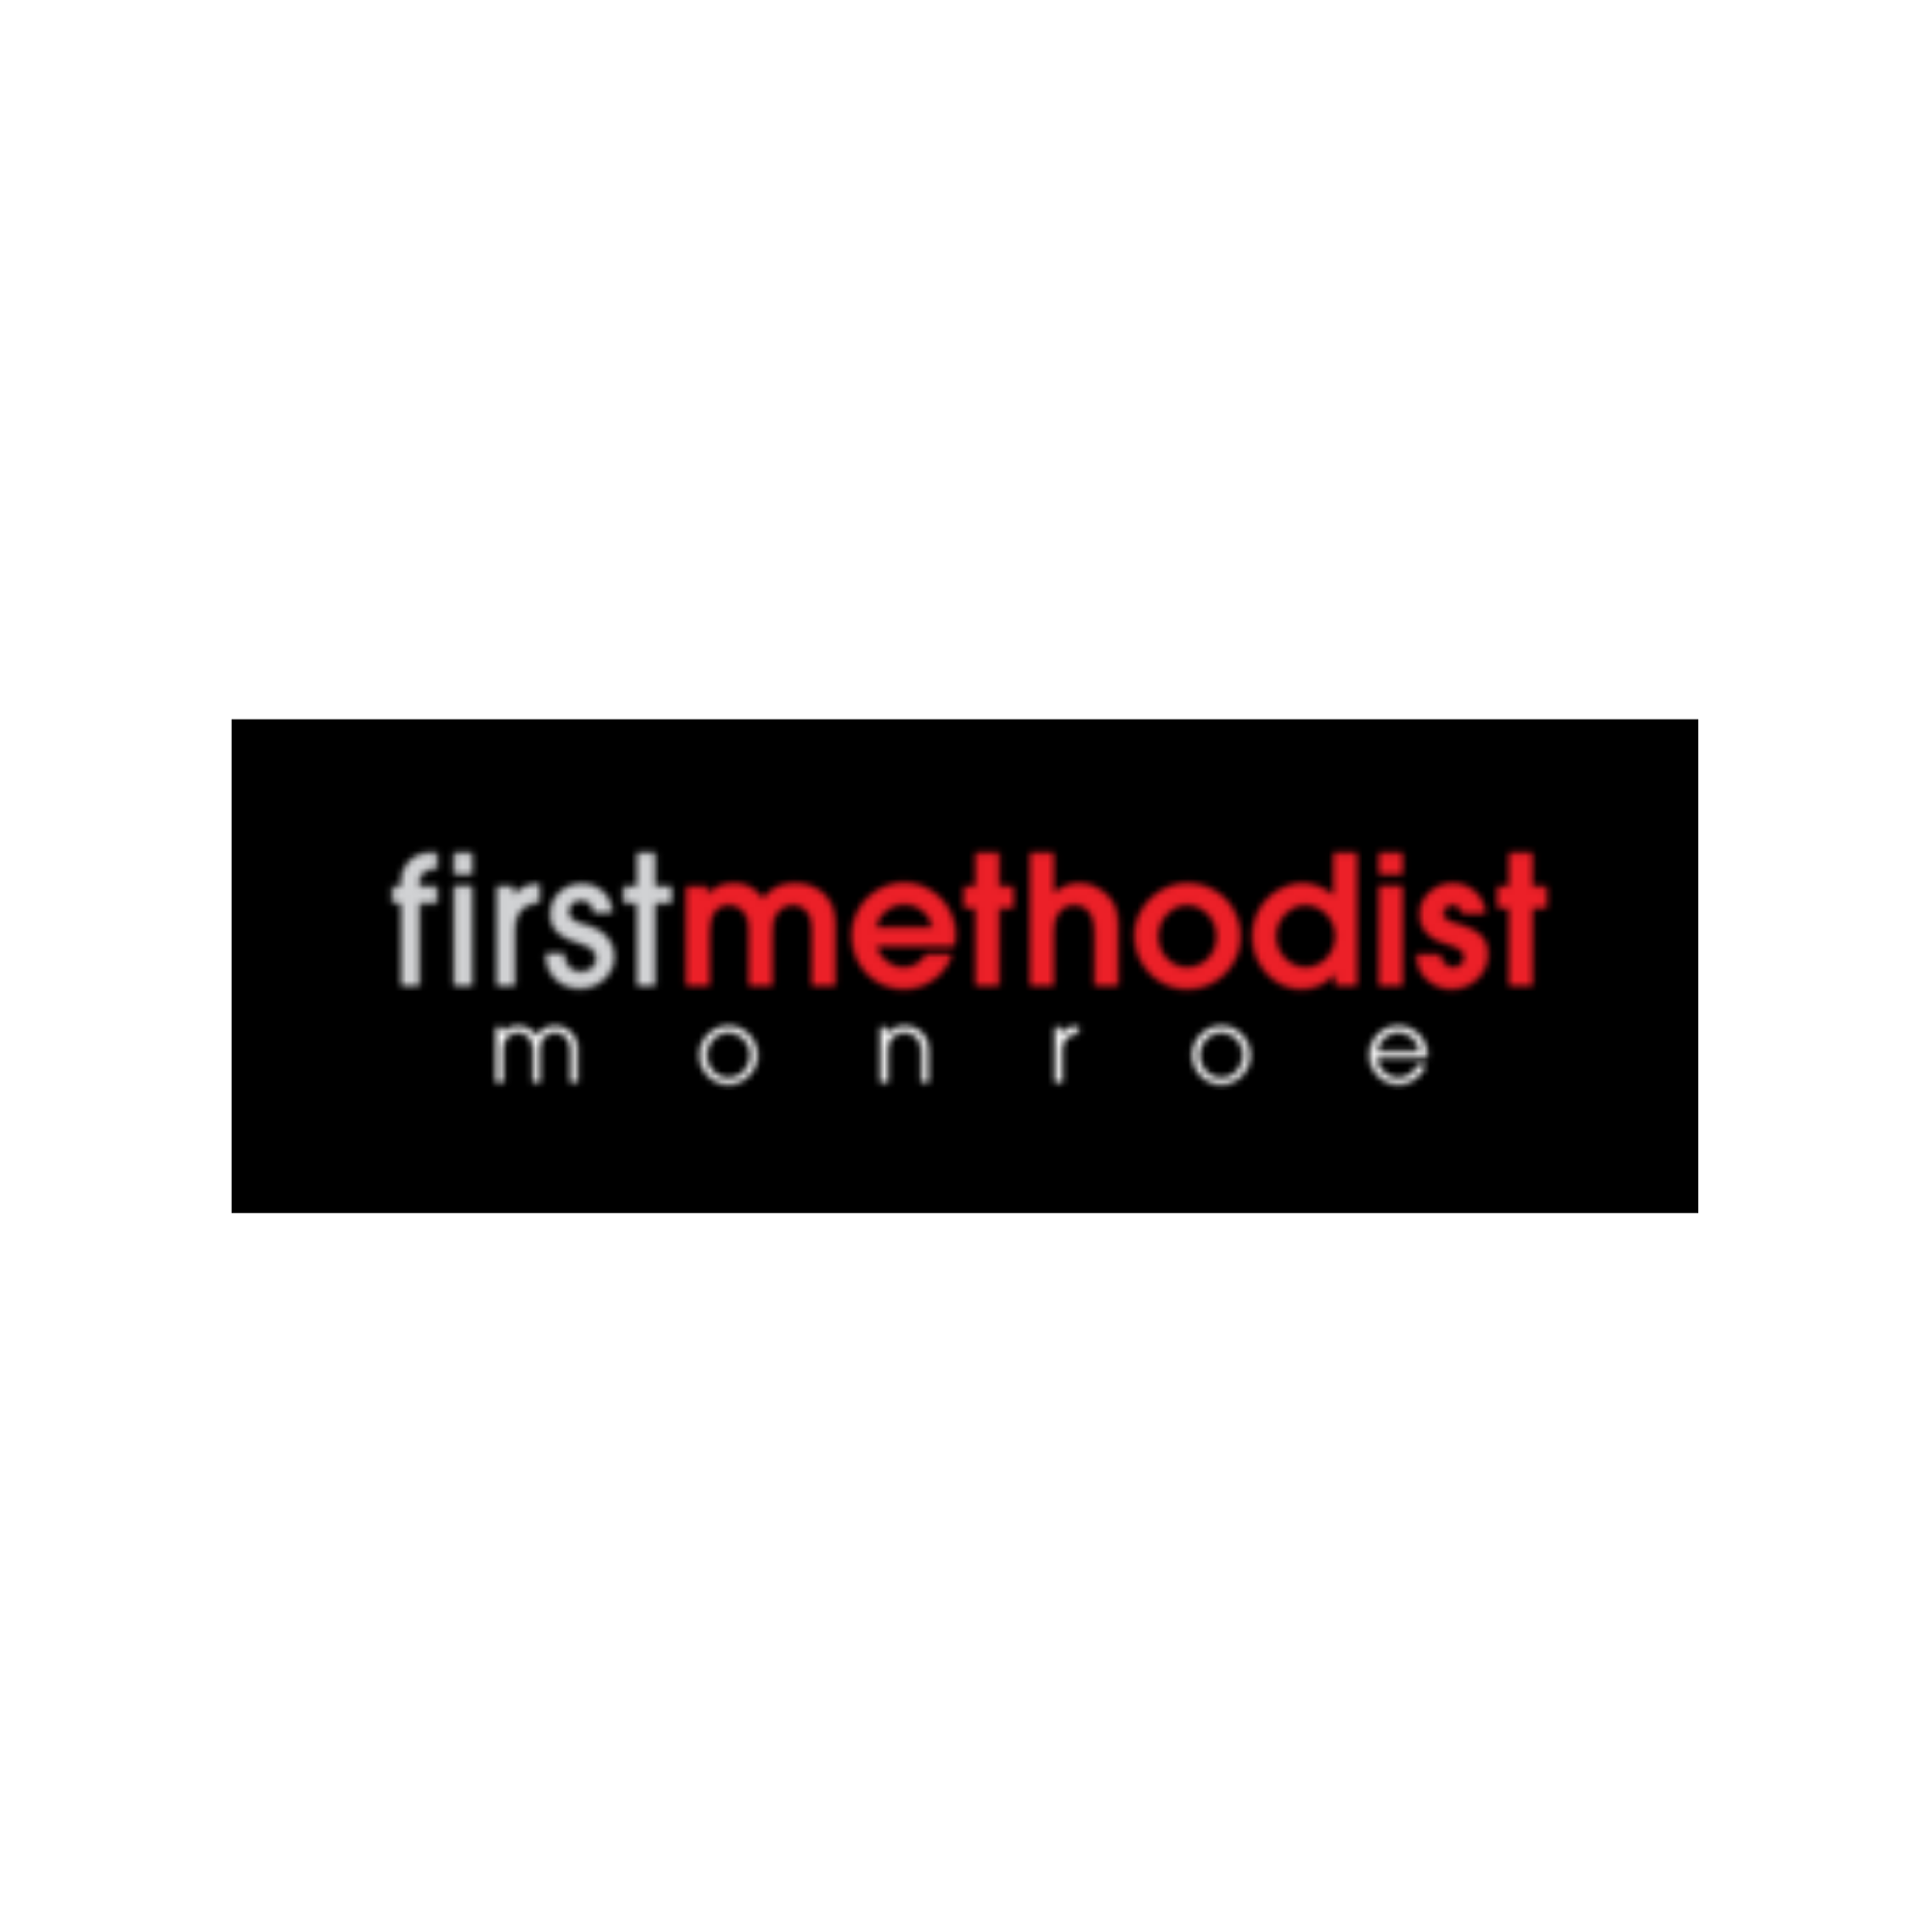 "a black and white logo for firstmethodist monroe